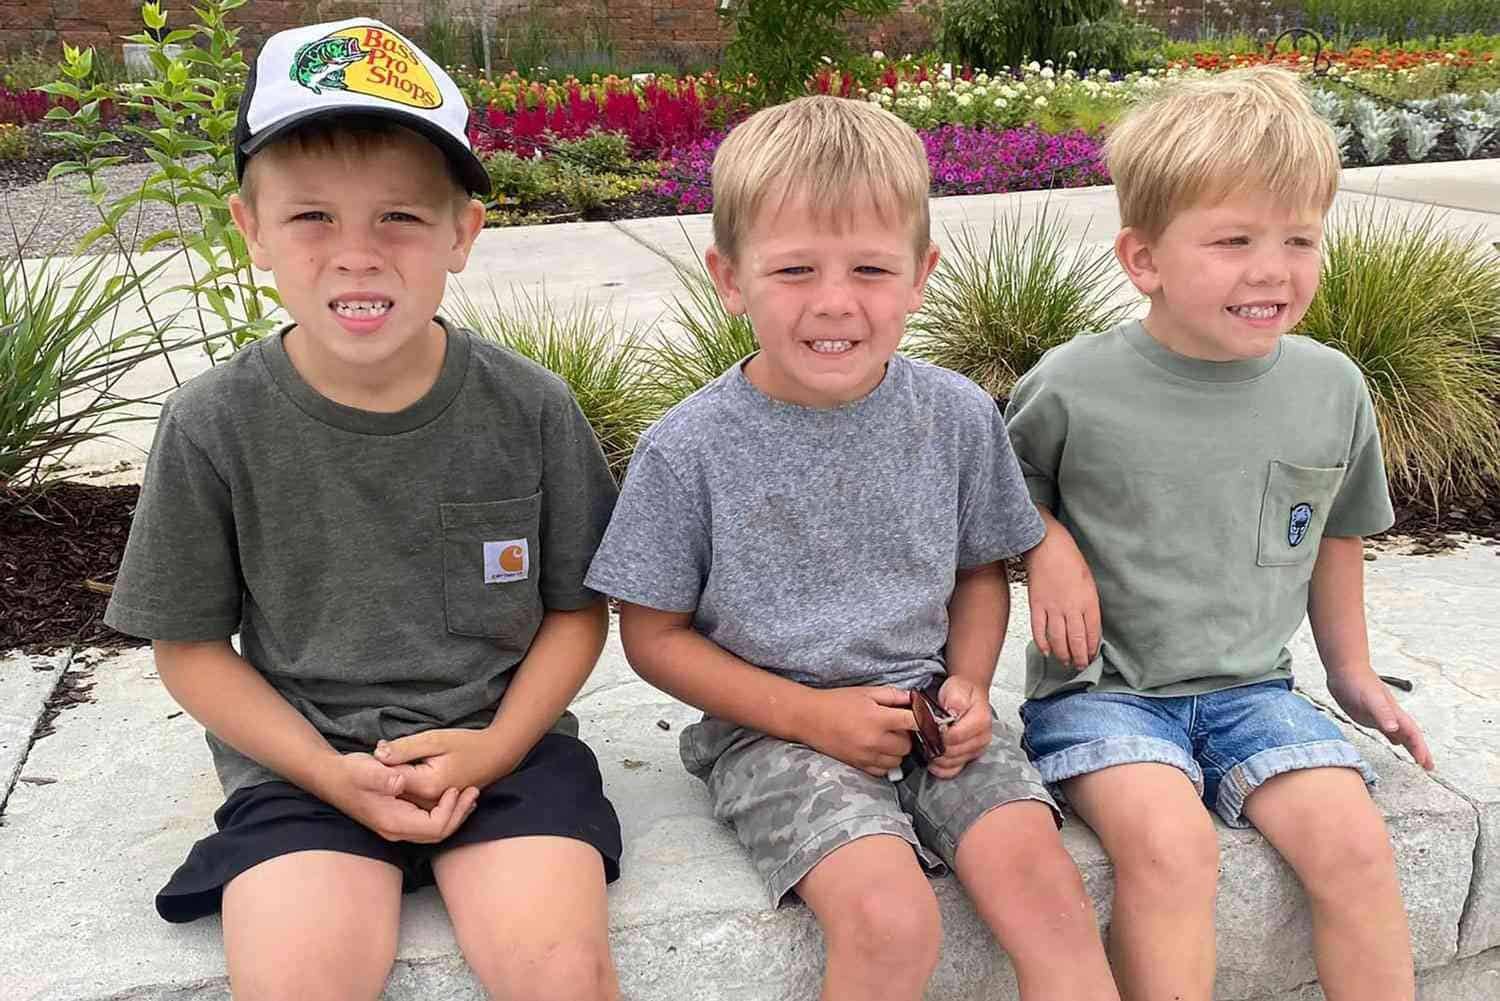 Ohio Man Kills 3 Sons